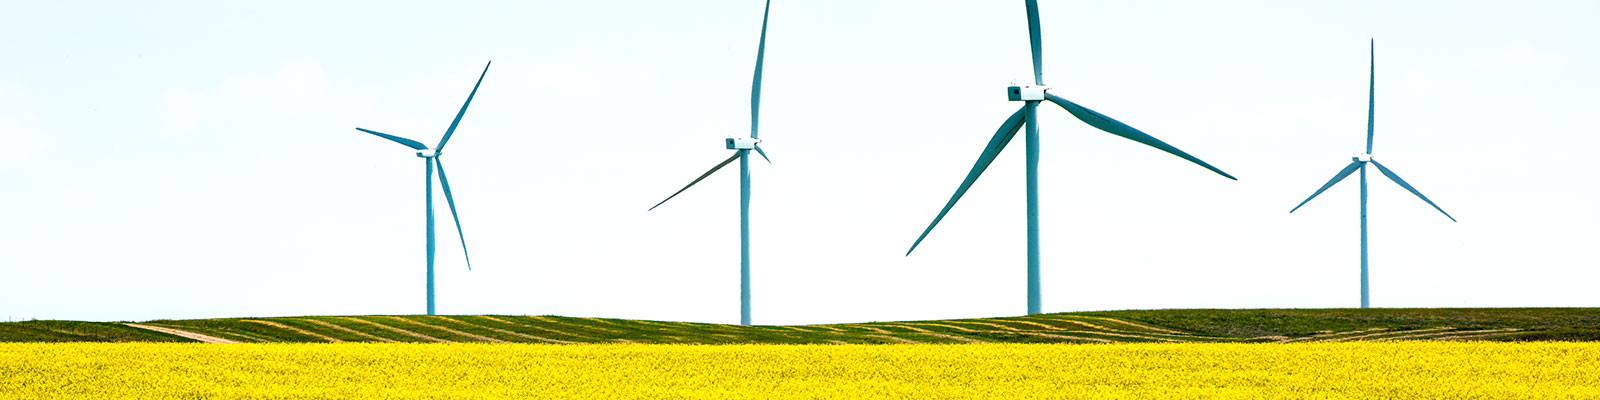 Wind farm and canola field